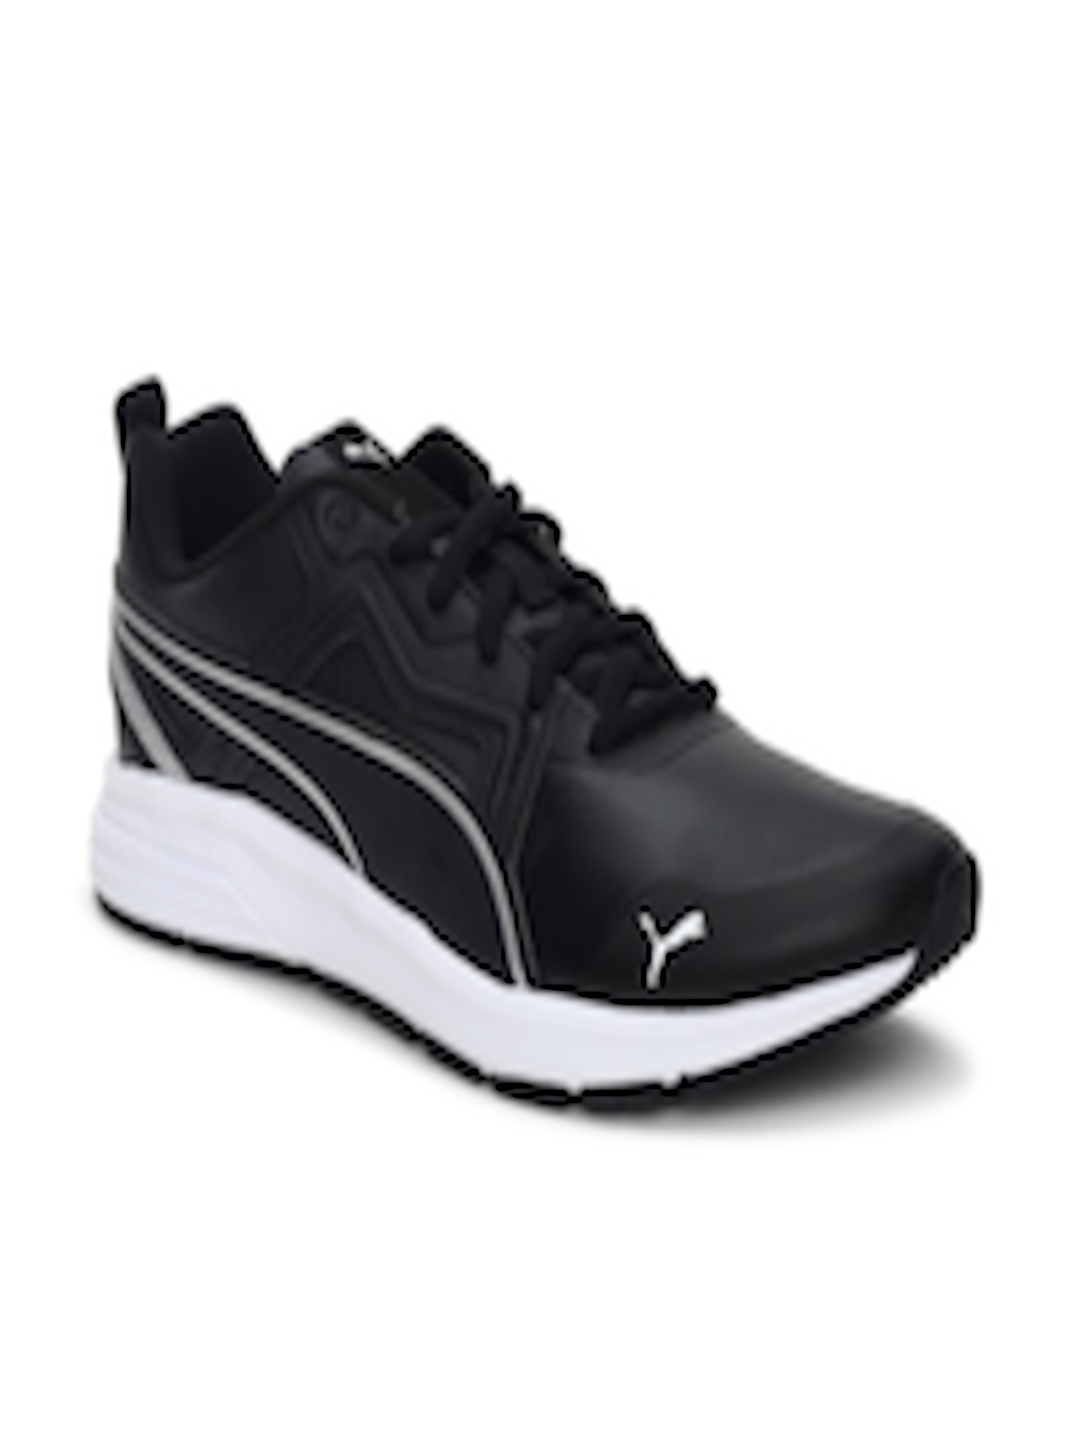 Buy Puma Unisex Kids Black Running Shoes - Sports Shoes for Unisex Kids ...